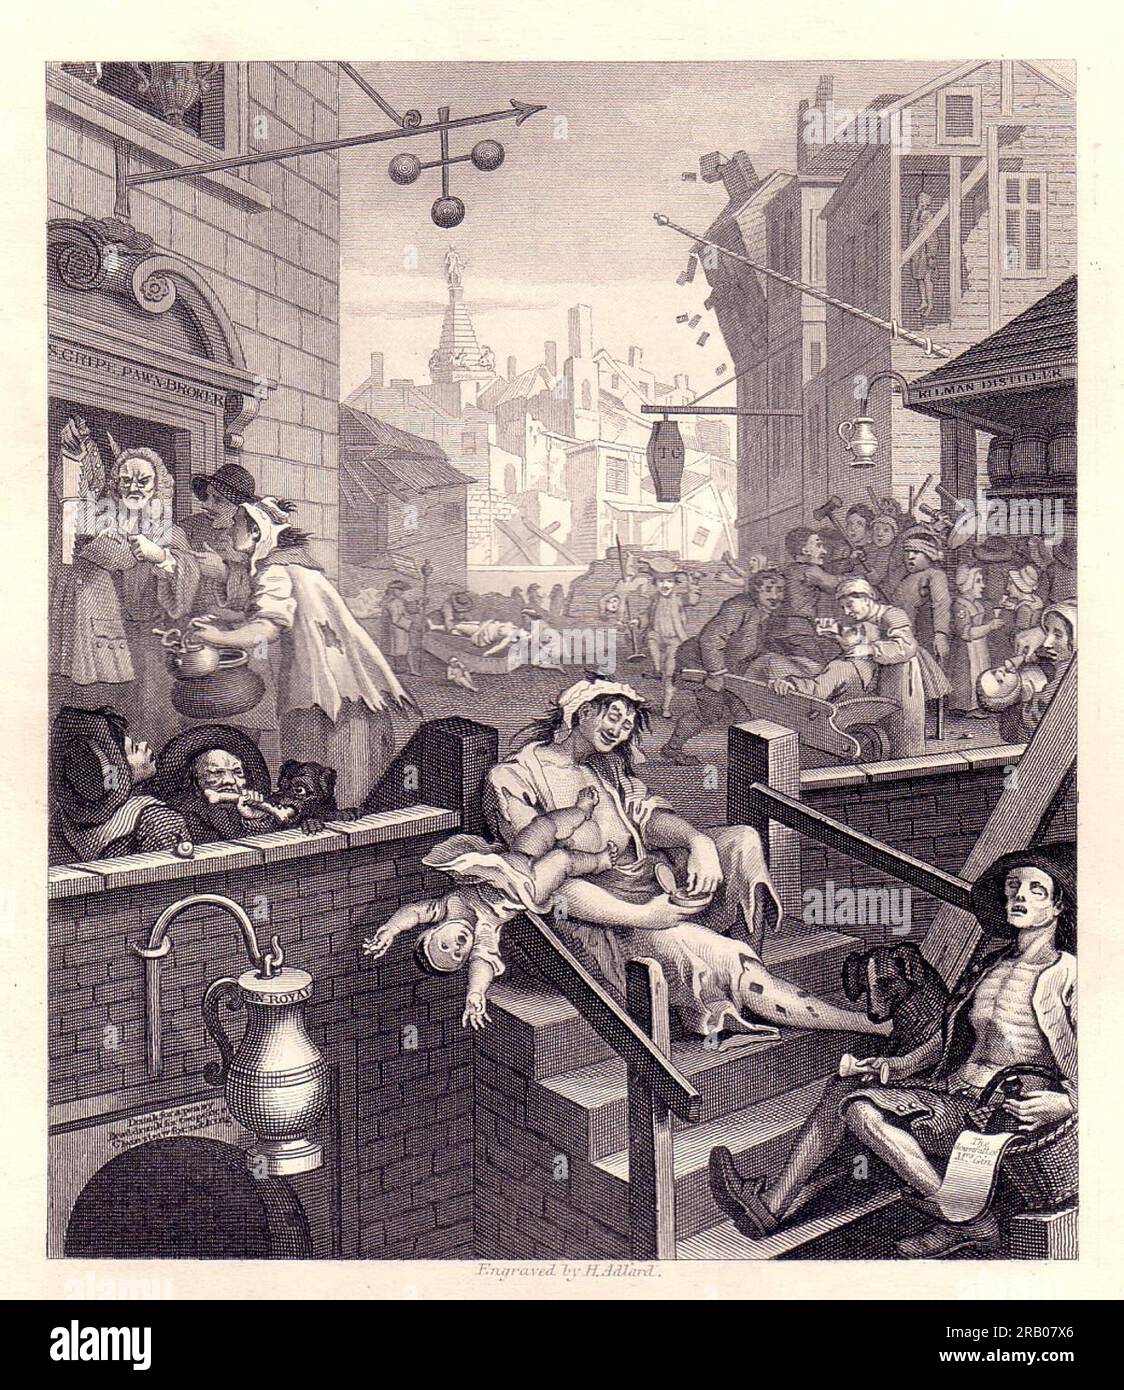 Gin Lane 1751 de William Hogarth Banque D'Images